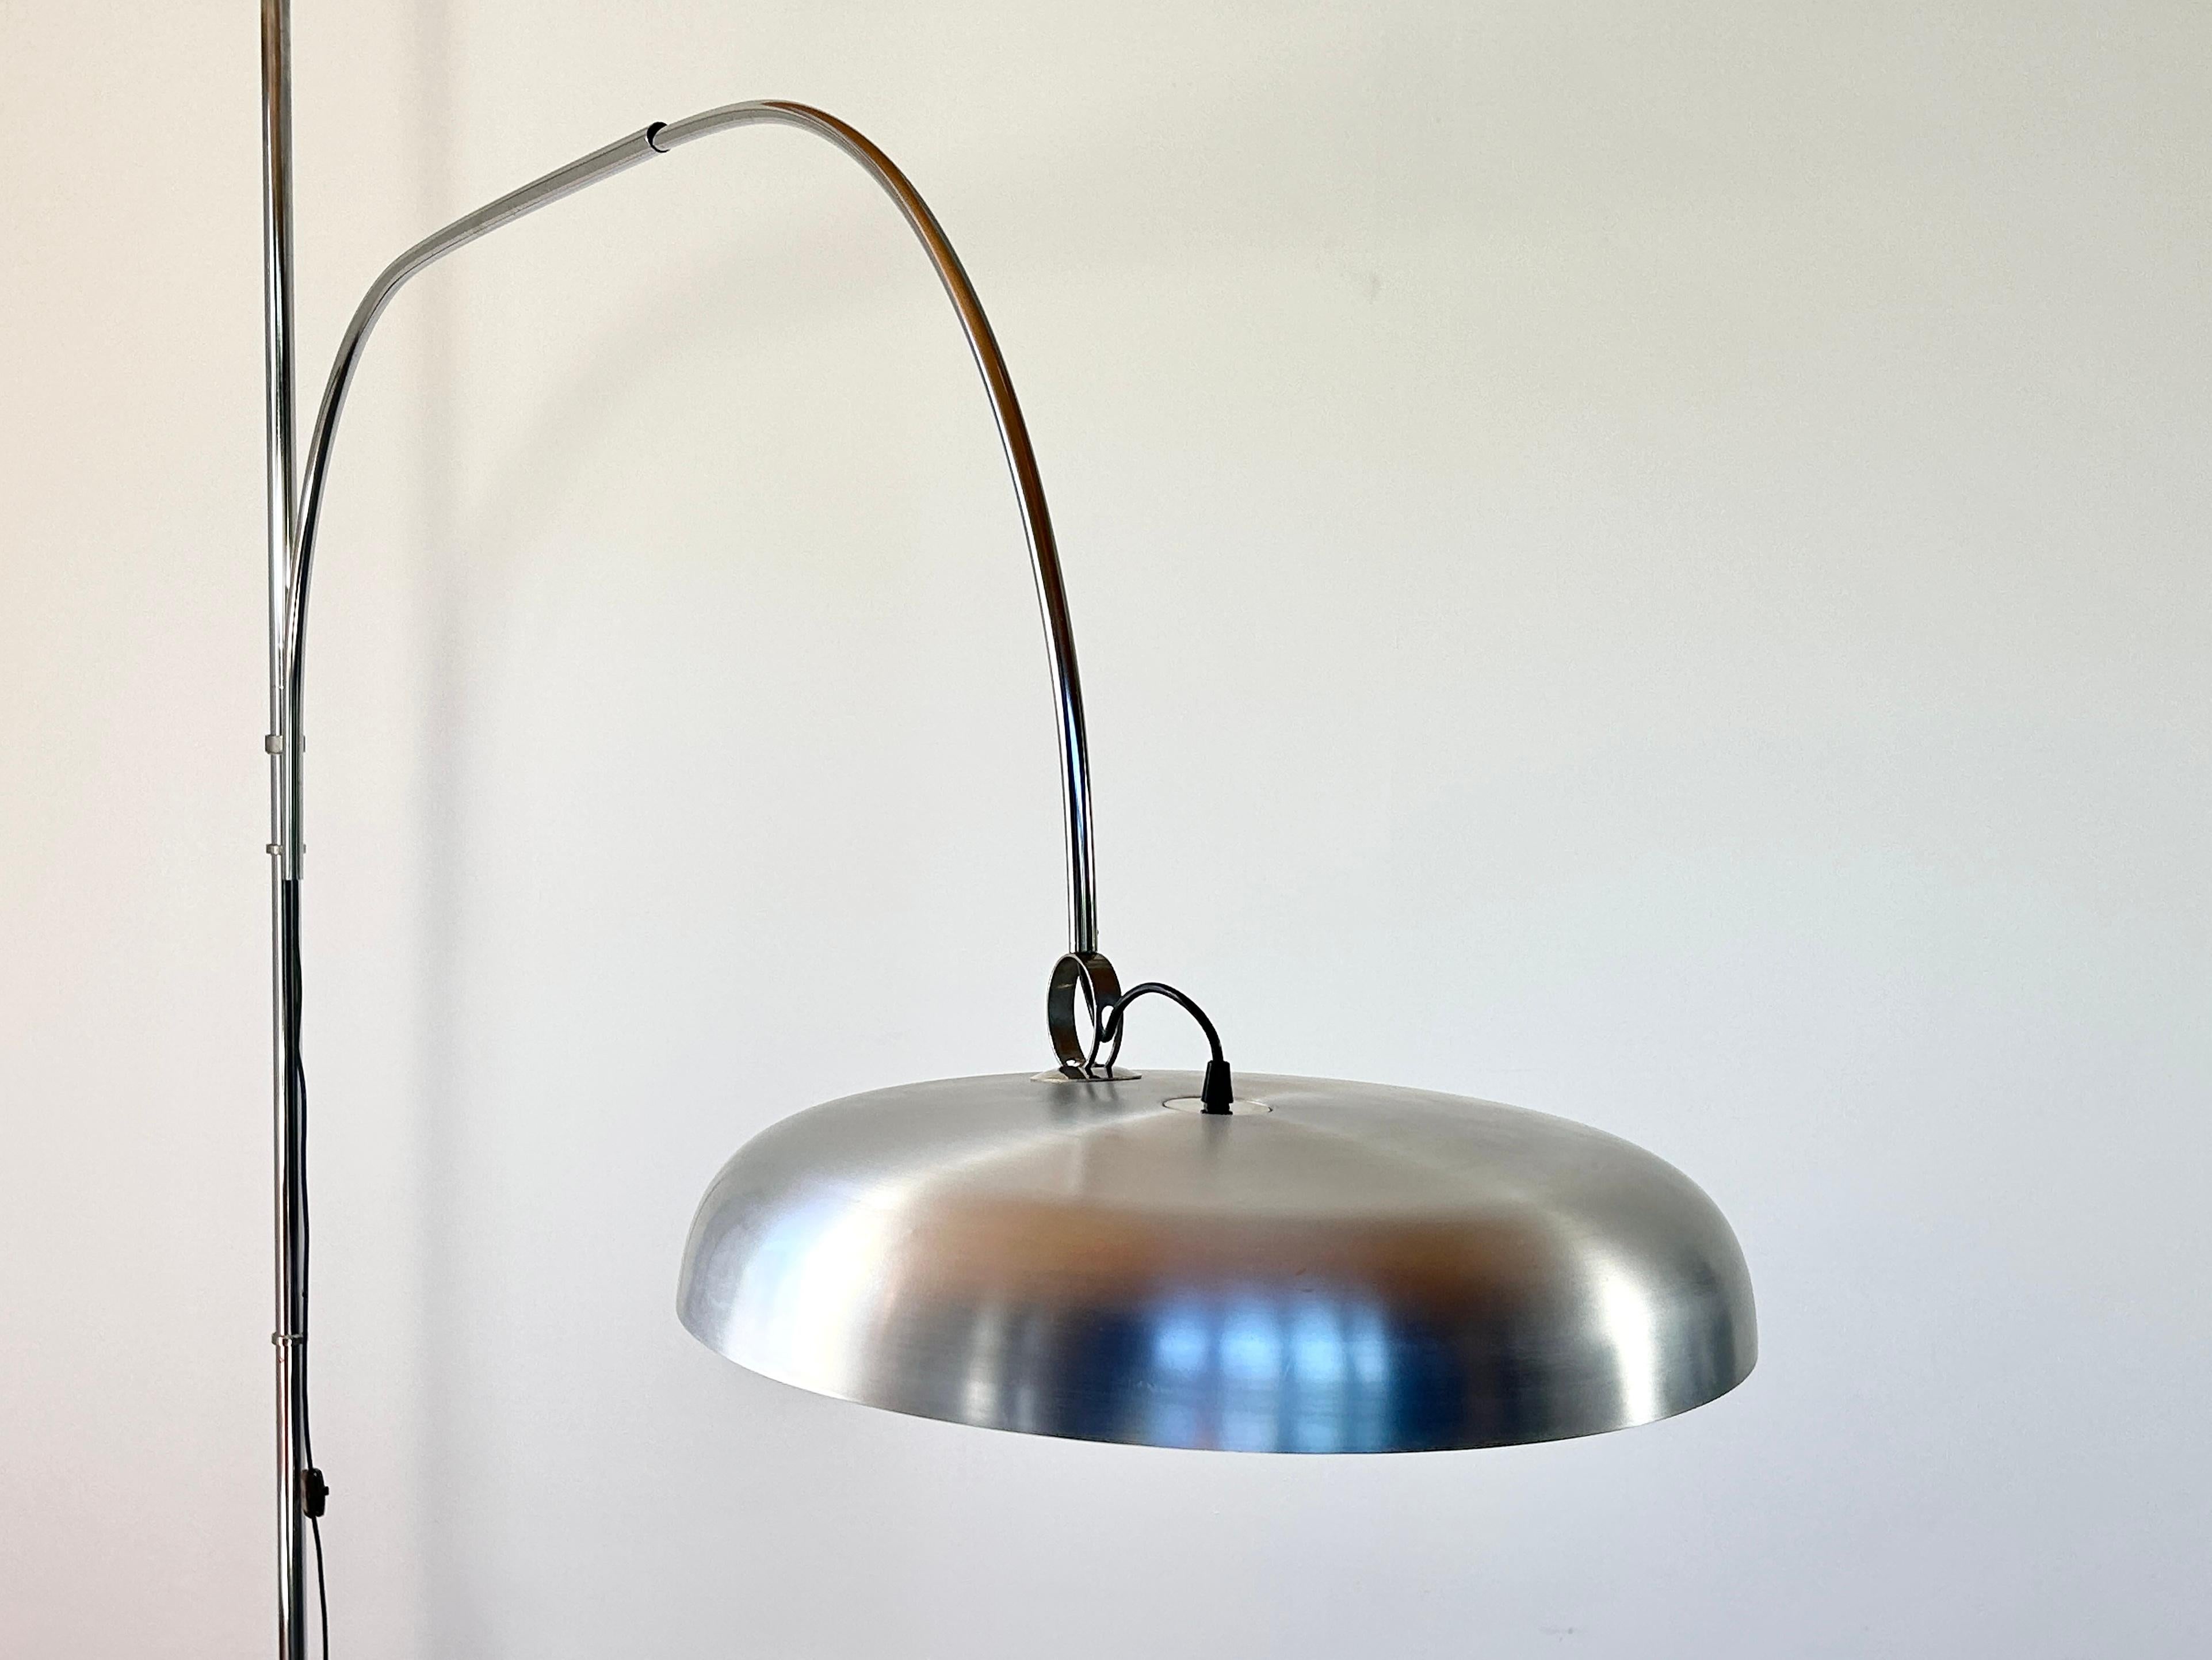 Steel PR Arc Lamp designed by Pirro Cuniberti for Sirrah Imola, Italy 1970 